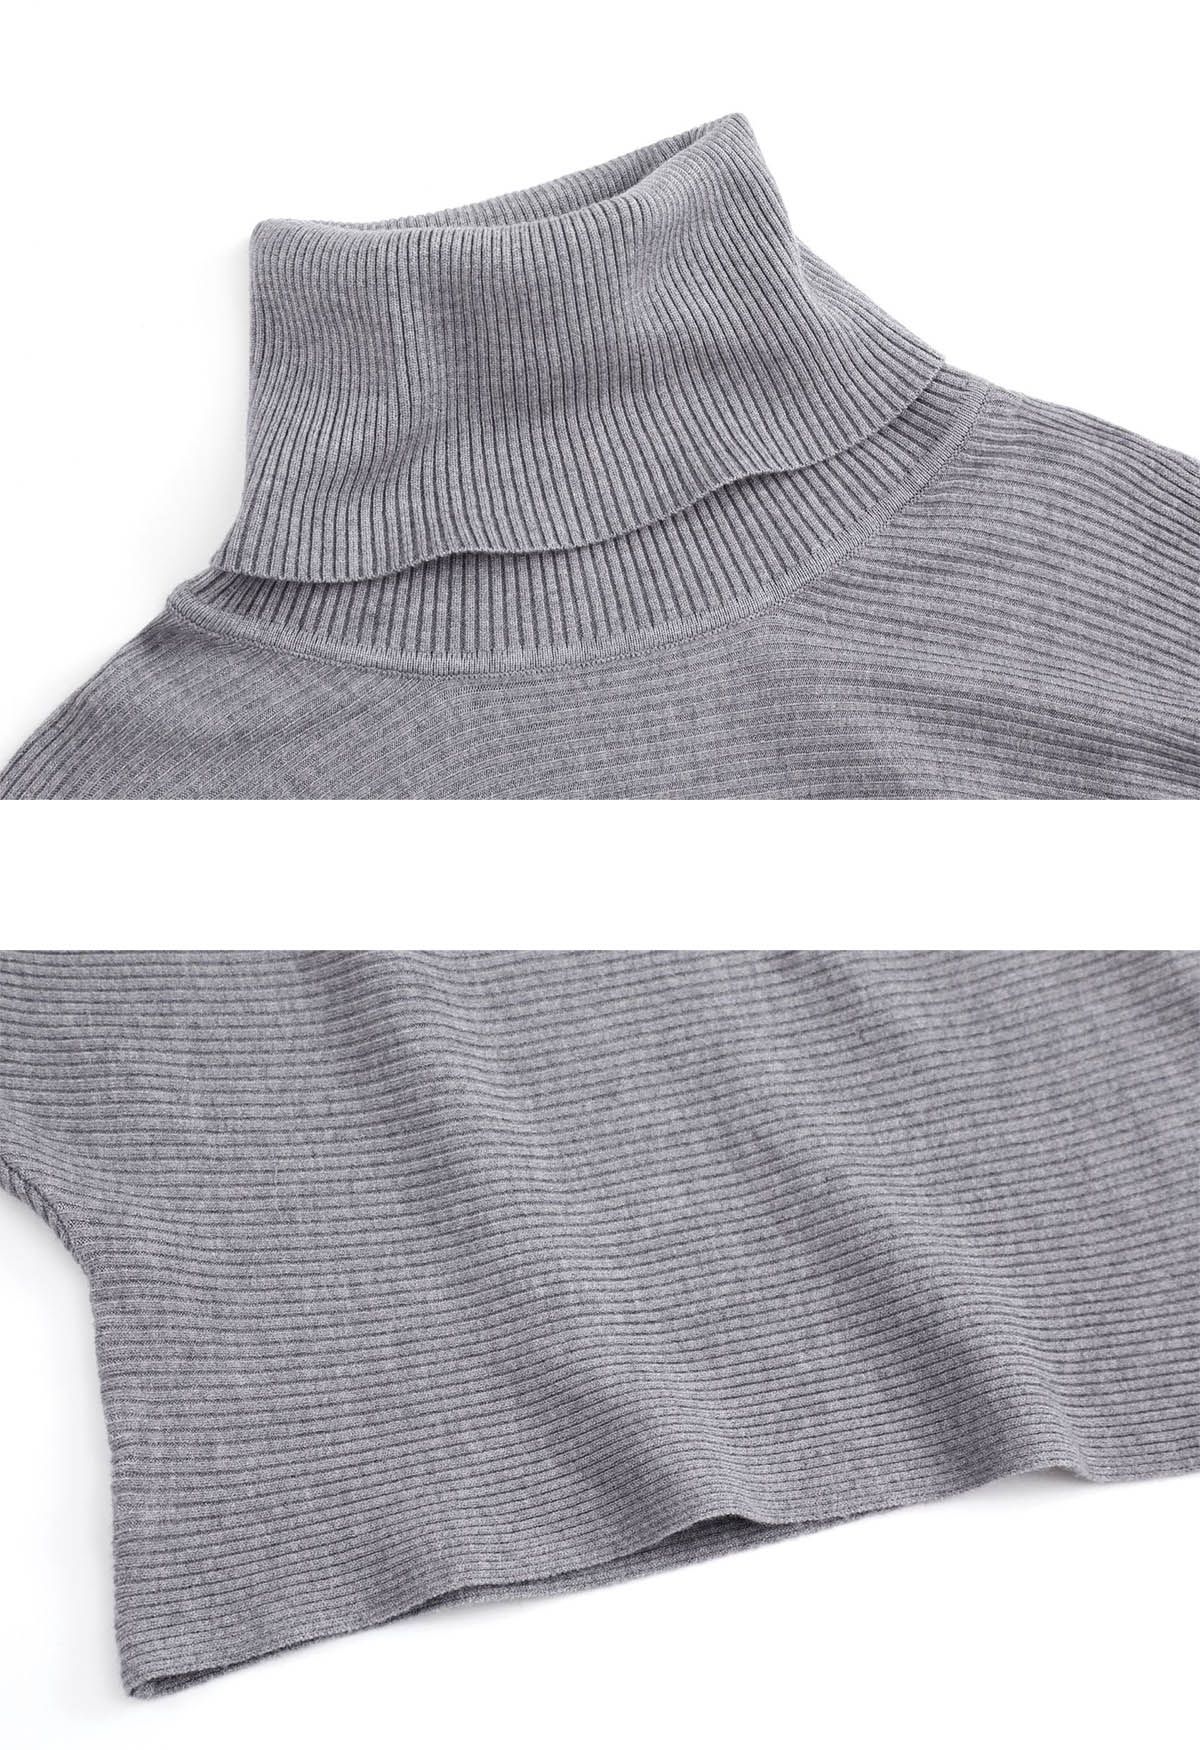 Turtleneck Batwing Sleeves Rib Sweater in Grey